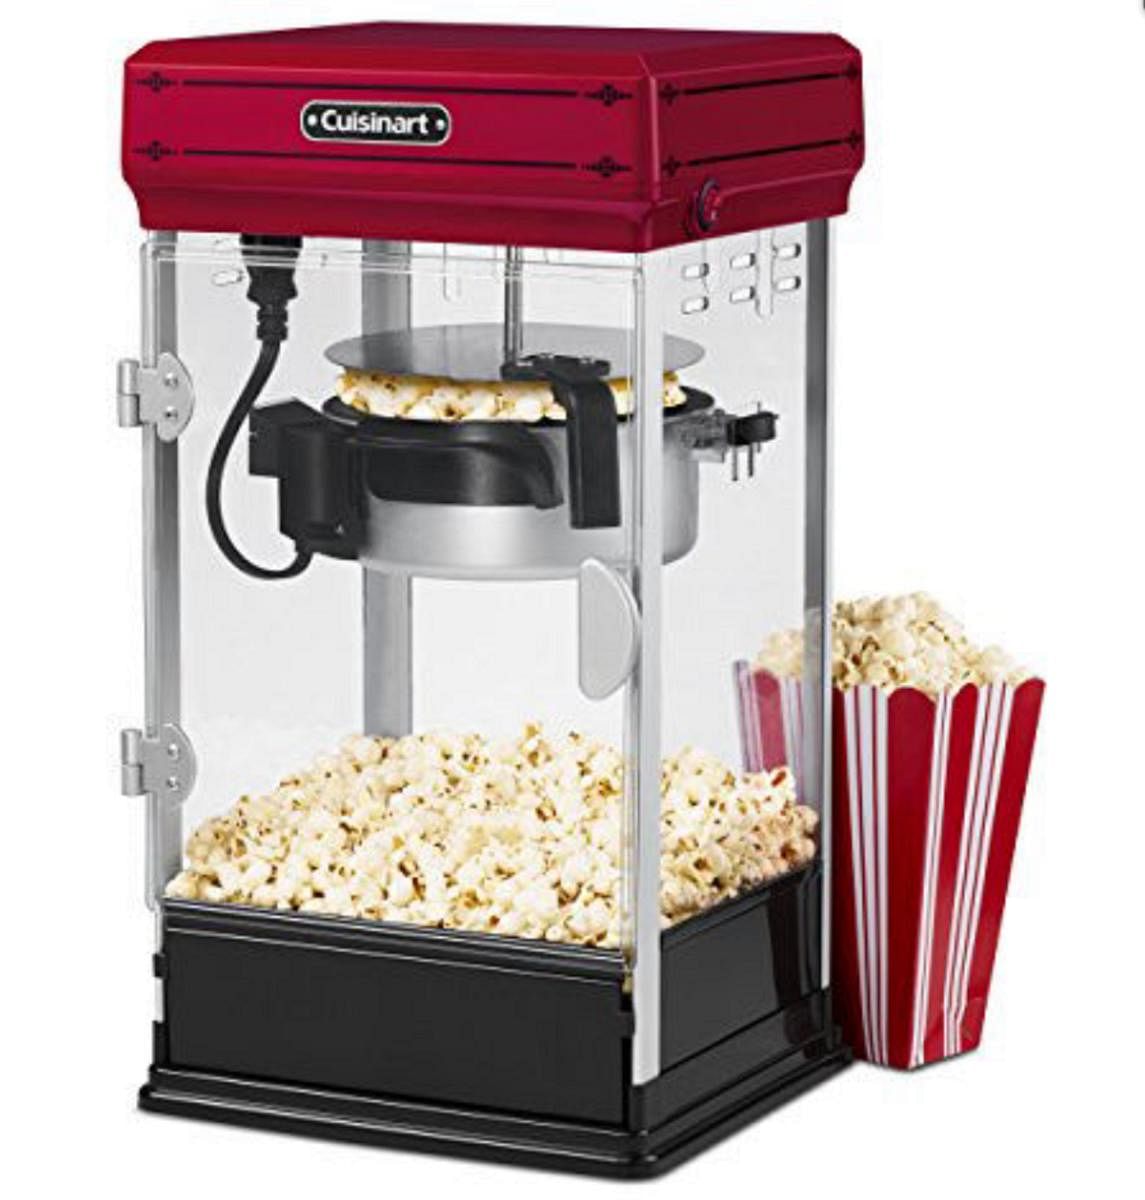 Popcorn maker. Price: Rs 14,142 on getuscart.com